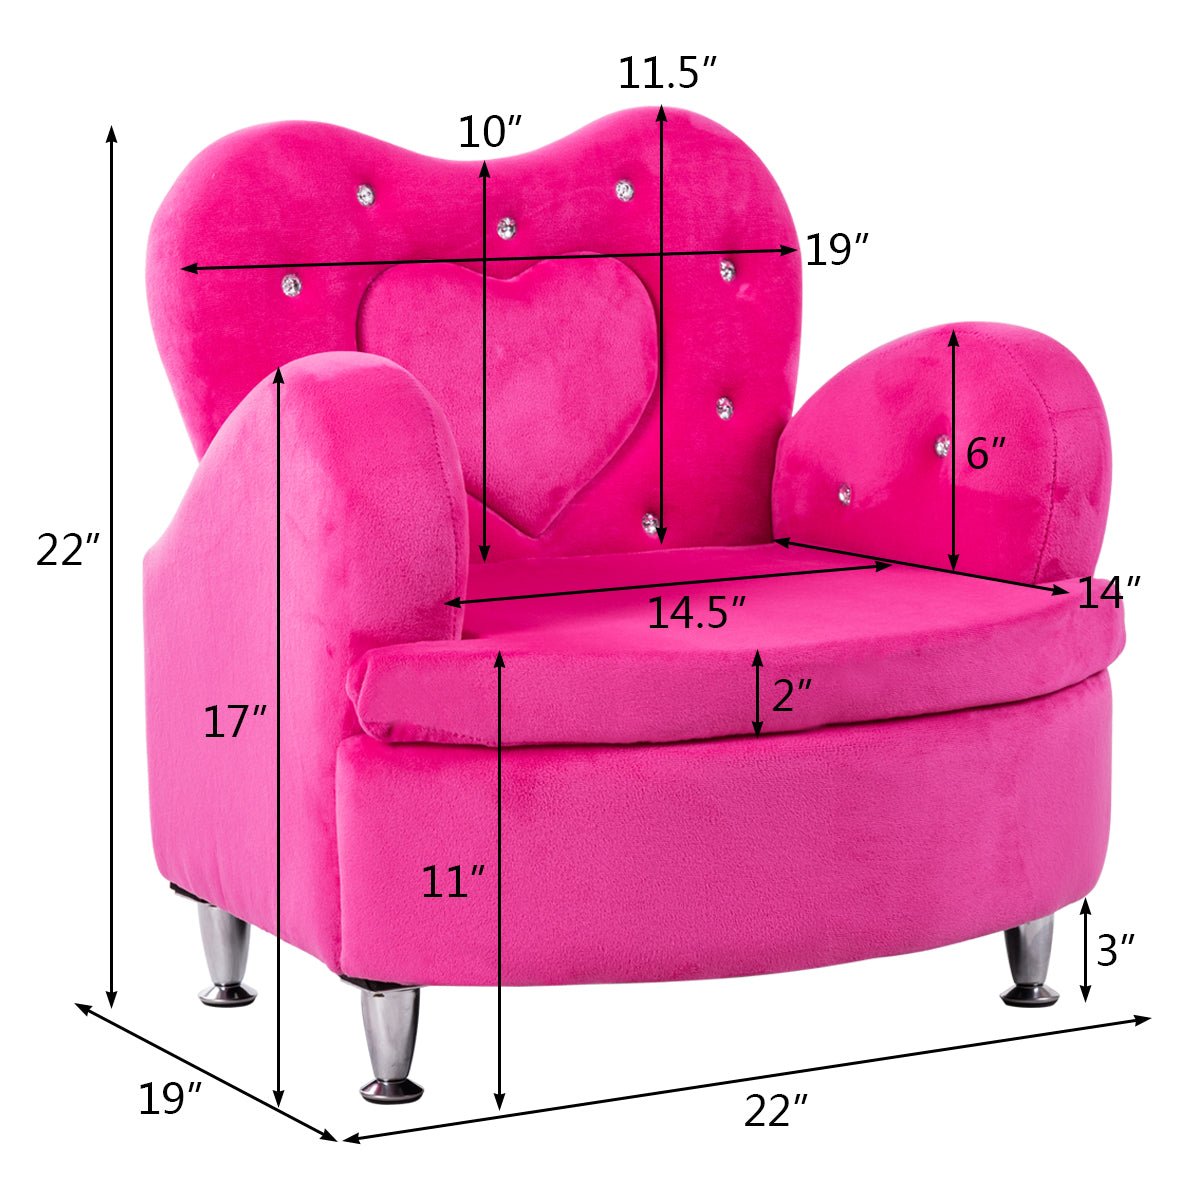 Single Kids Sofa Armrest Chair: Comfy Toddler Seat, Non-slip Legs